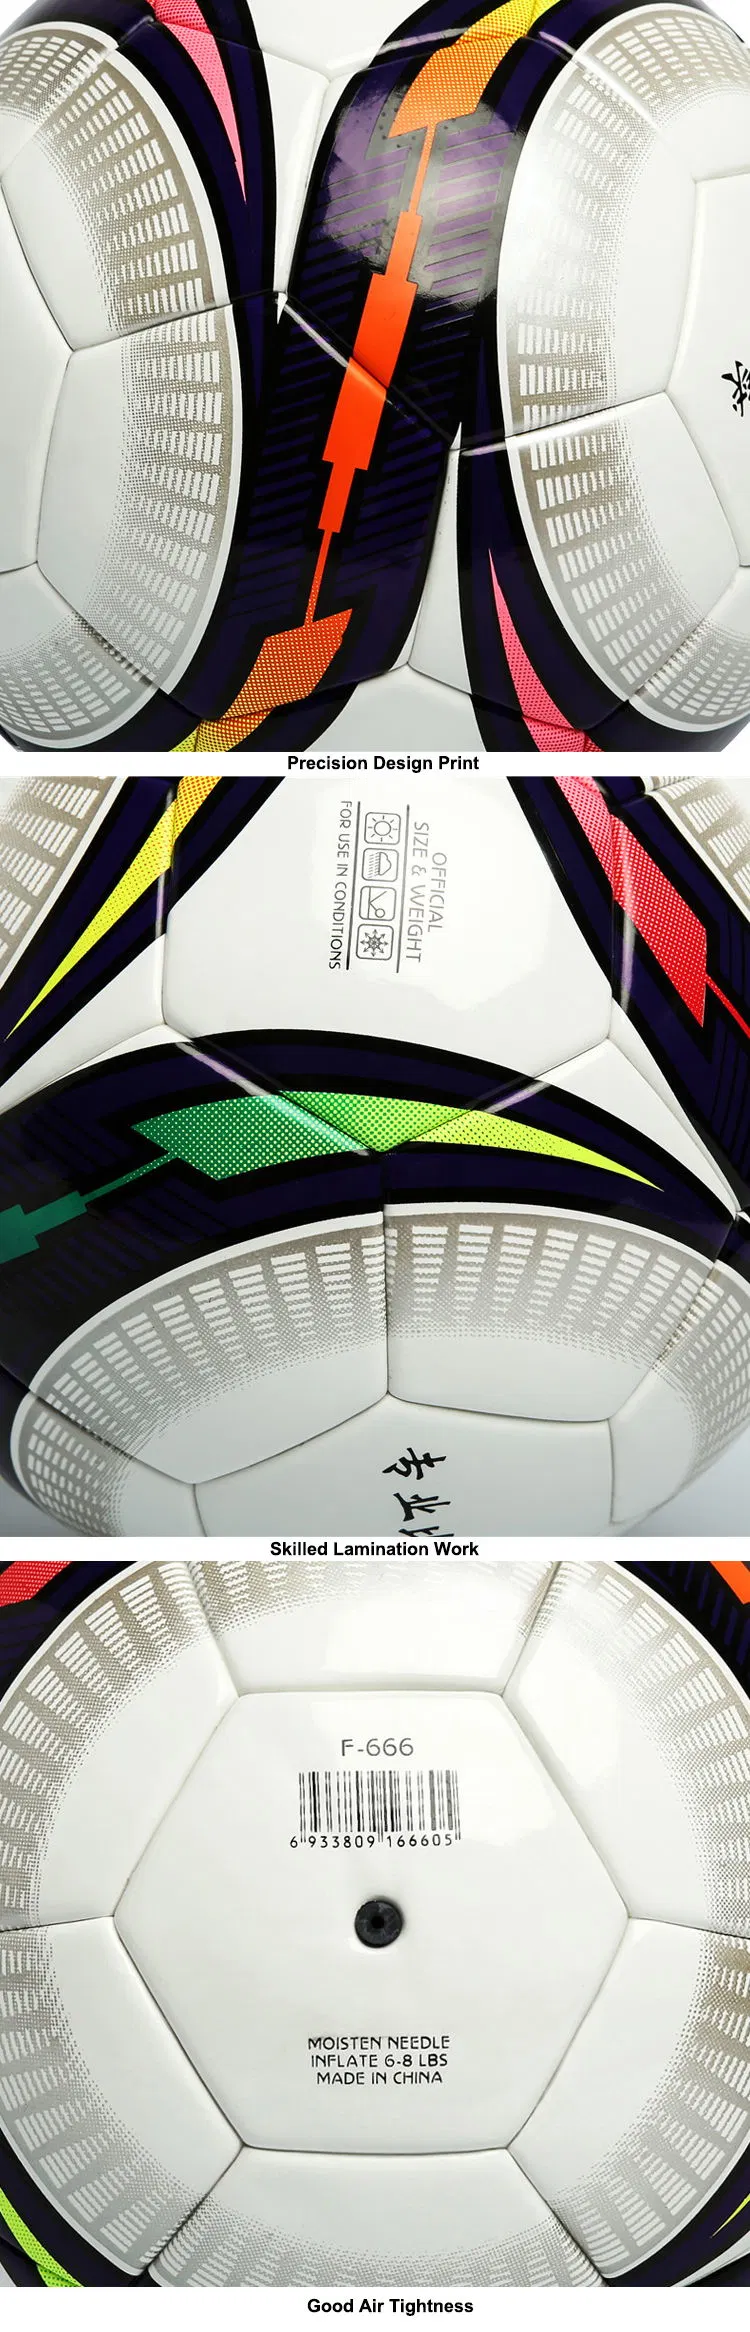 Premium Standard Size Weight Laminated Soccer Ball